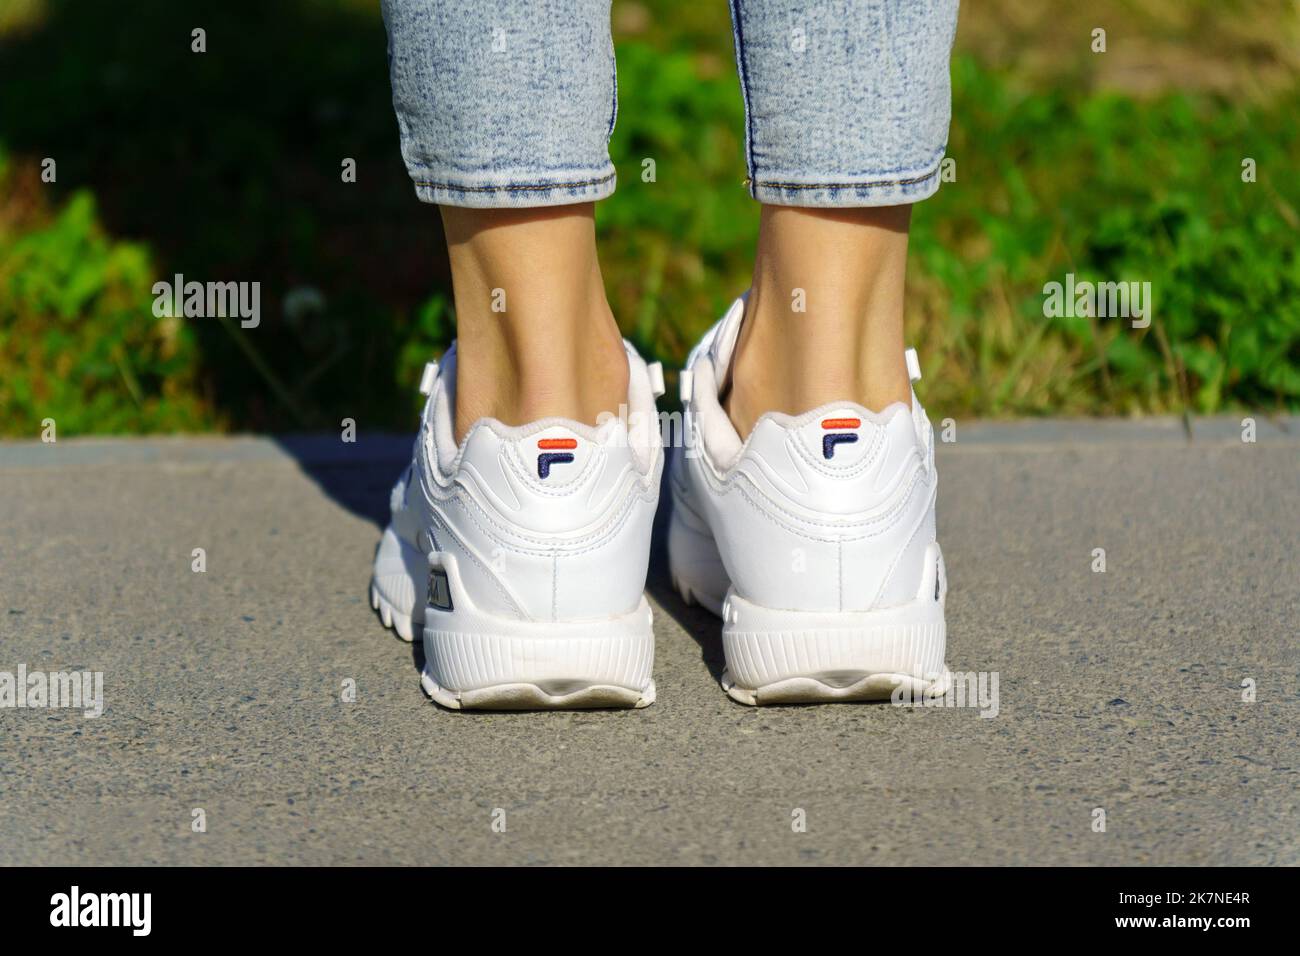 Fila shoes -Fotos und -Bildmaterial in hoher Auflösung – Alamy